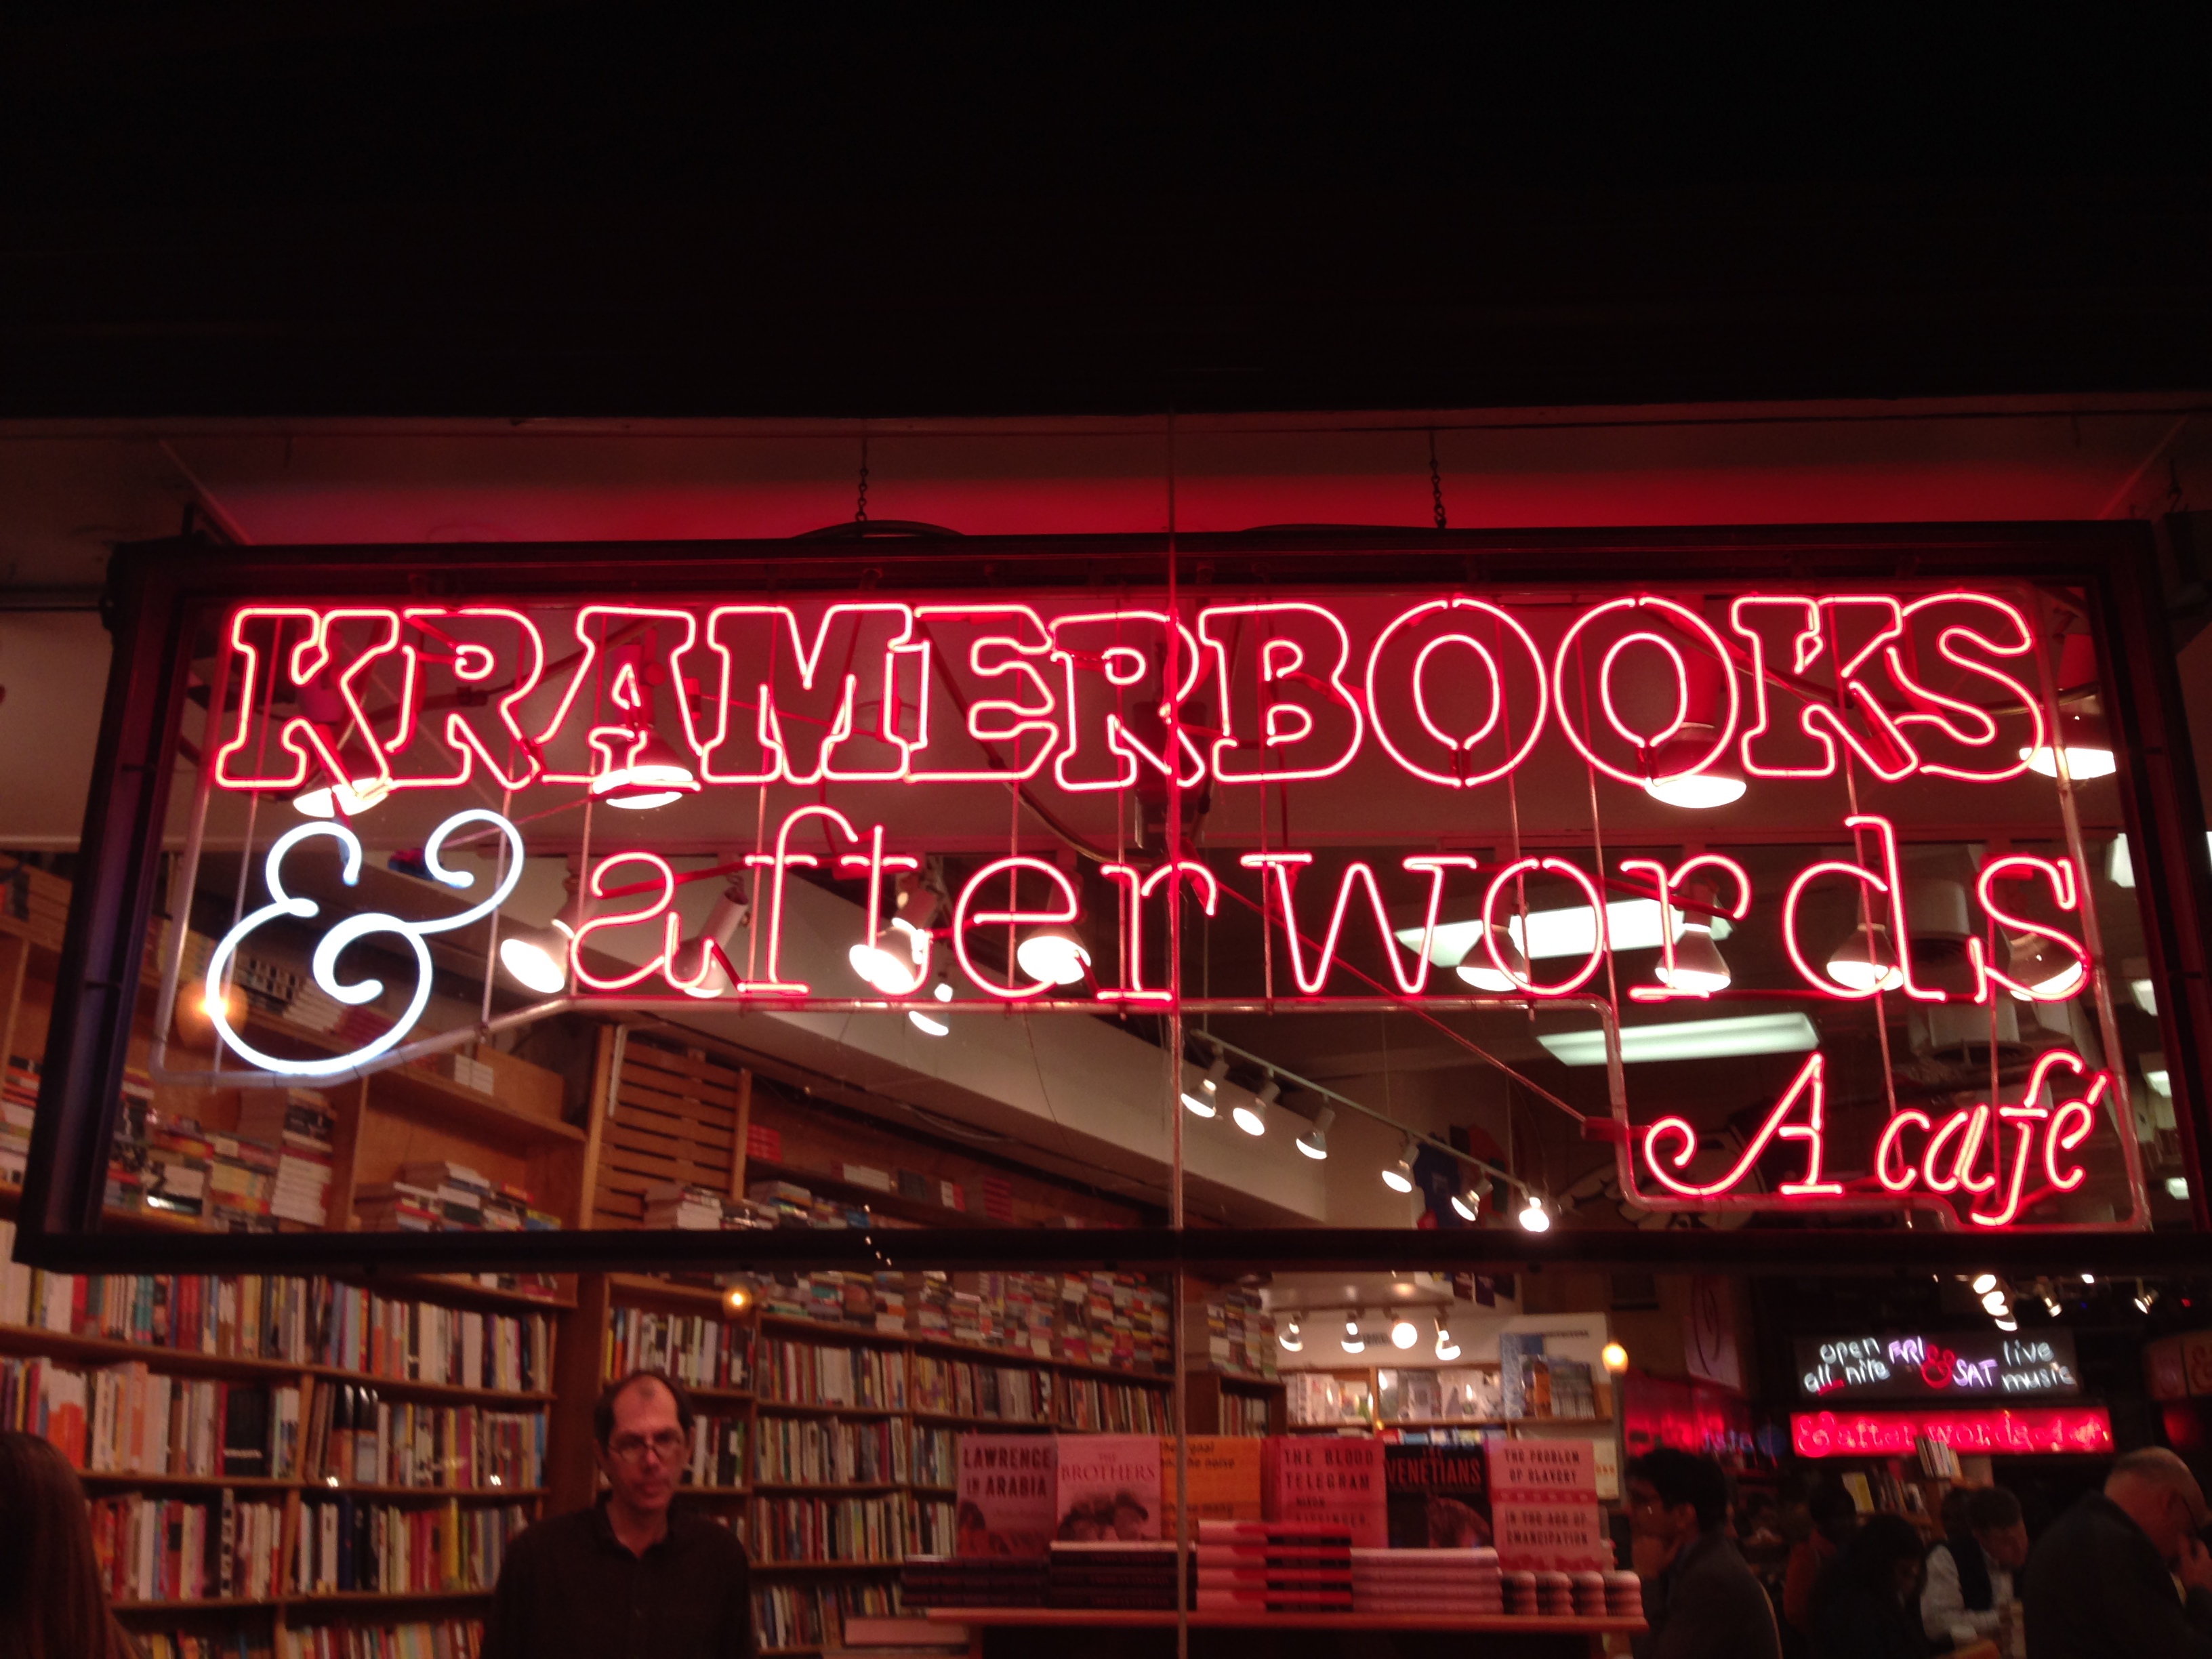 Kramerbooks